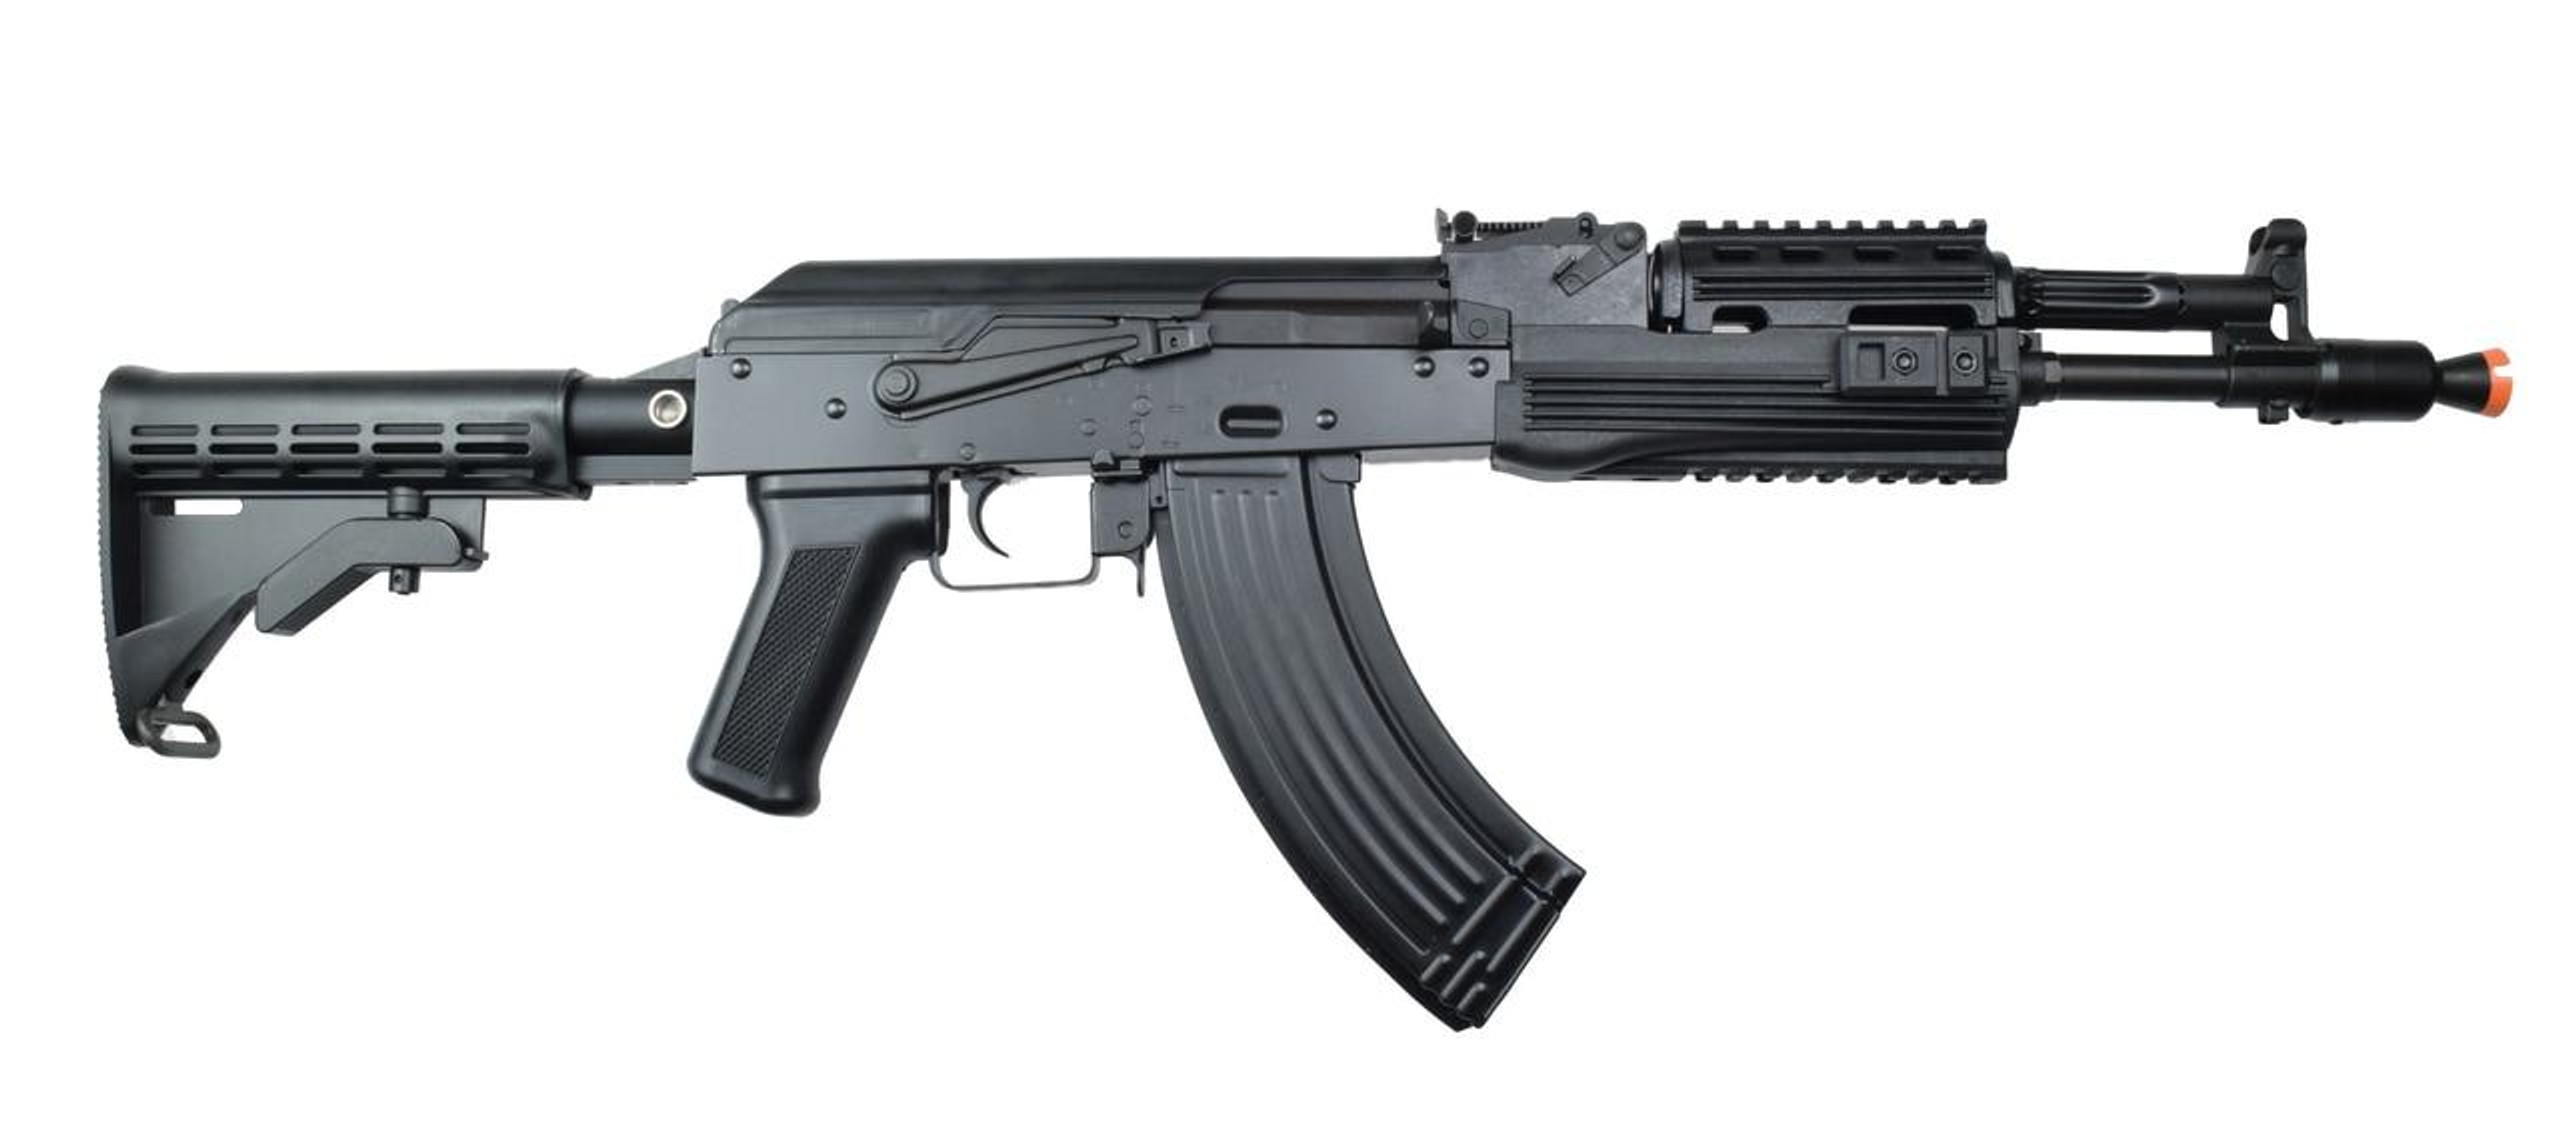 Lct Ak 104 Aeg Airsoft Rifle W Le Stock Black Tk104 Nv Aeg